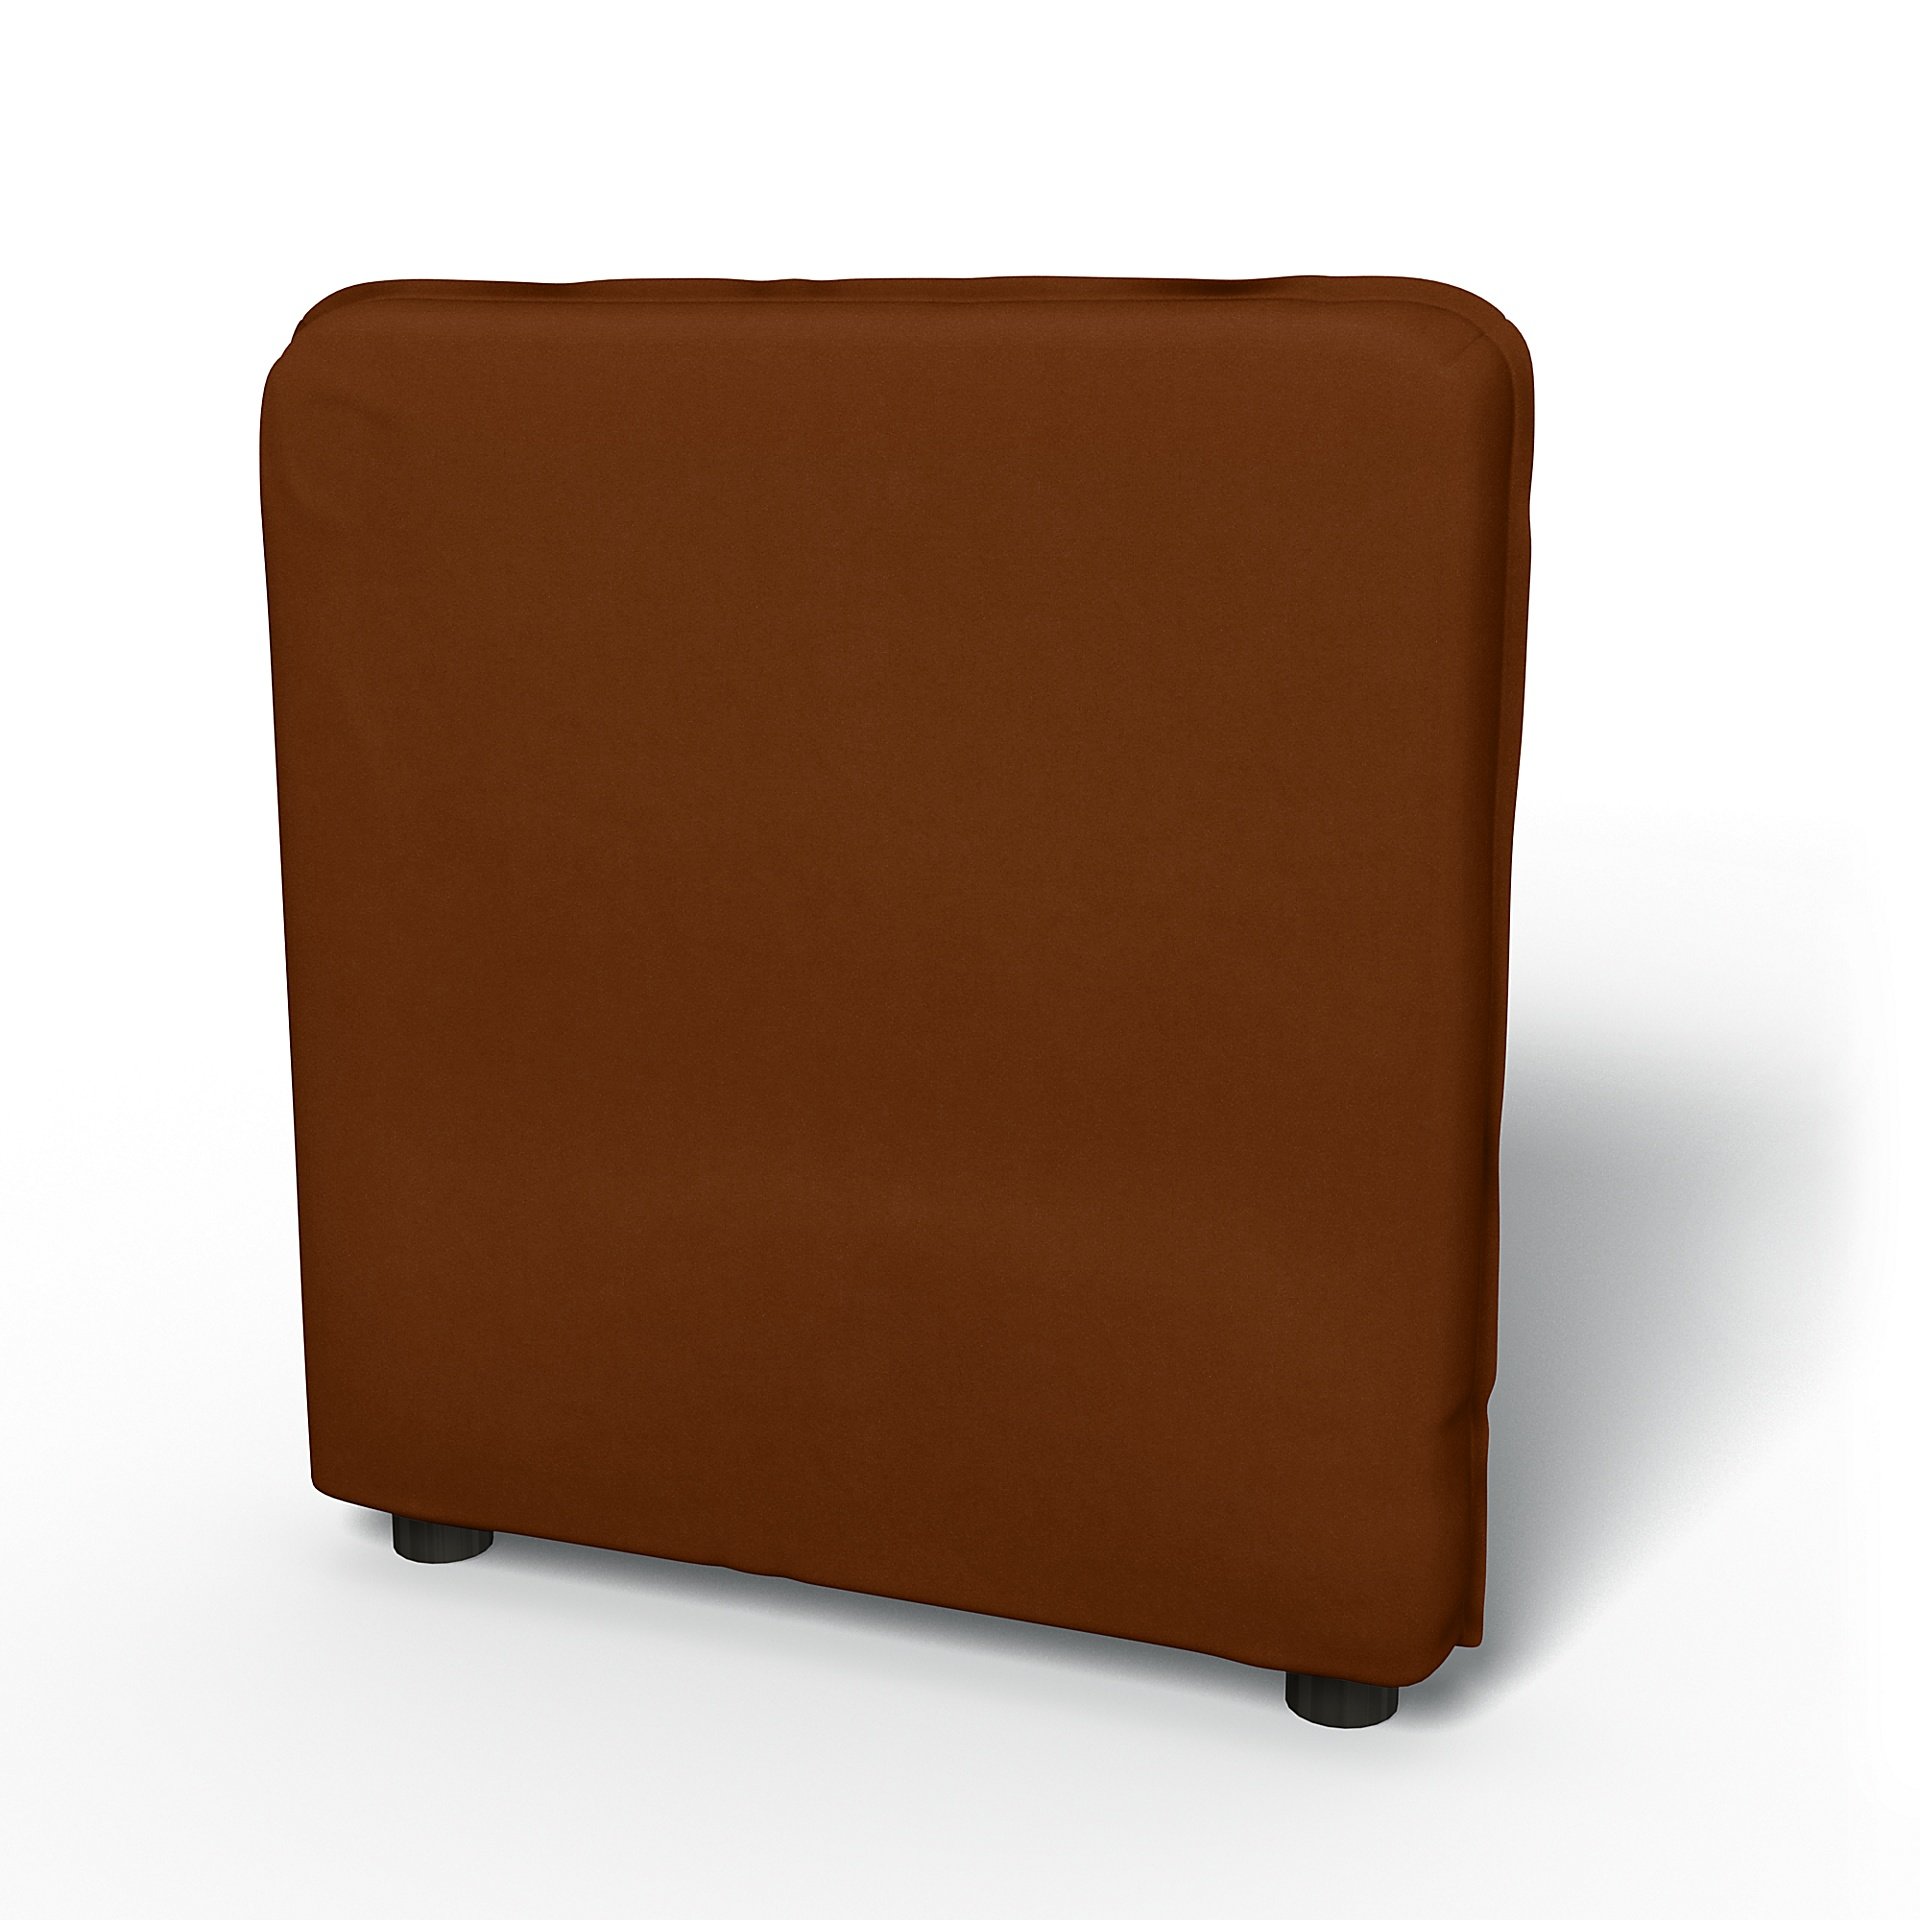 IKEA - Vallentuna Armrest Cover (80x60x13cm), Cinnamon, Velvet - Bemz